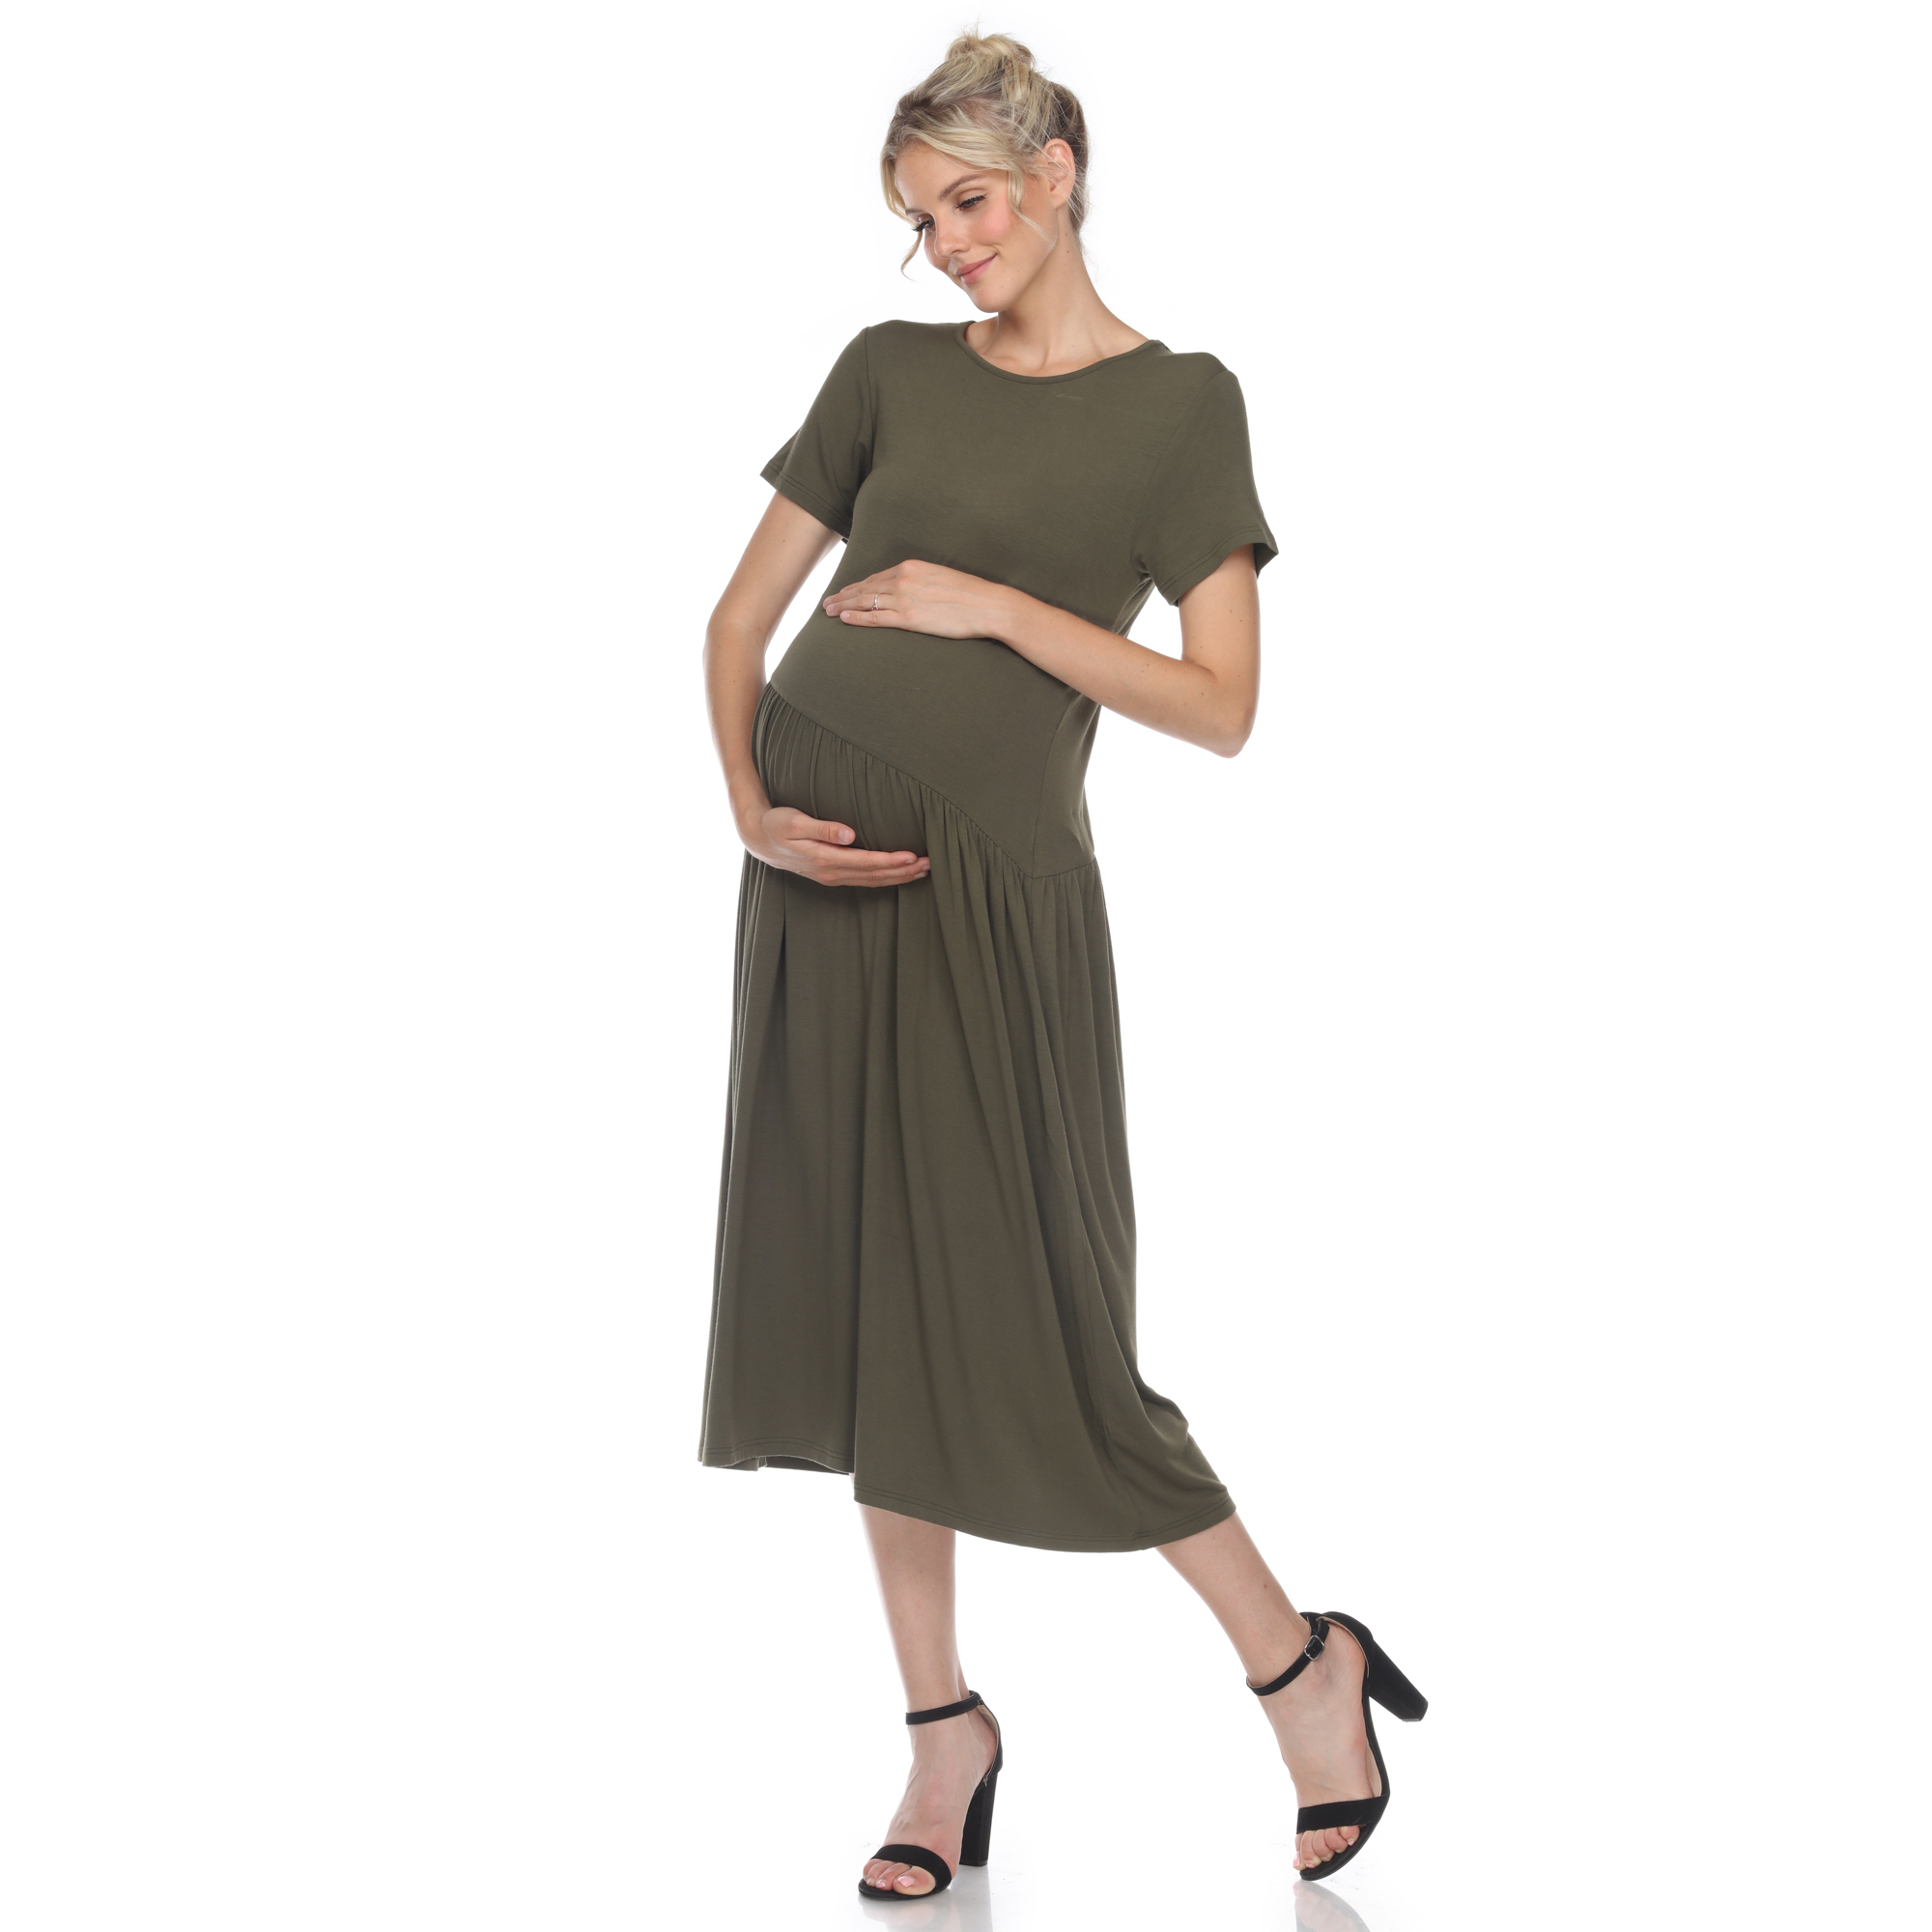 White Mark Womenâs Maternity Short Sleeve Maxi Dress - Olive, 3X